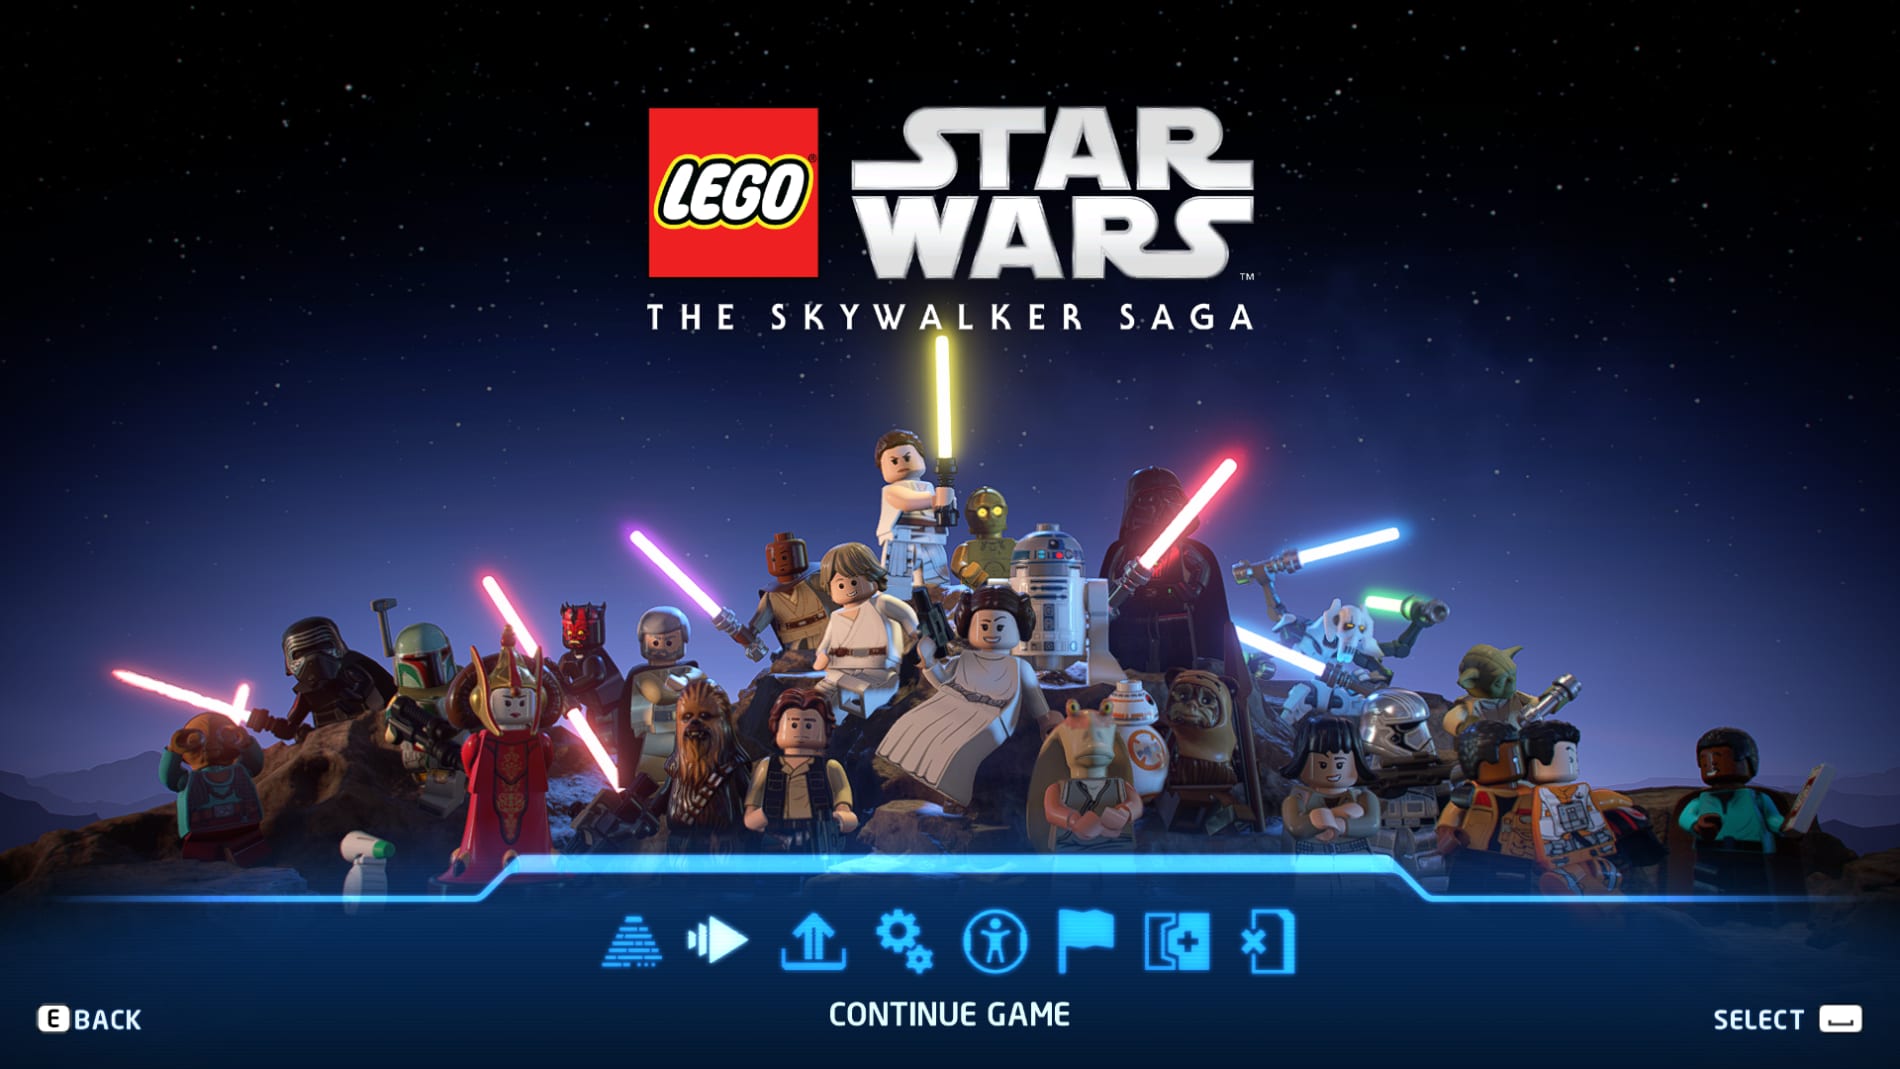 LEGO Star Wars Breaks The Last Jedi's Brilliant Plotting